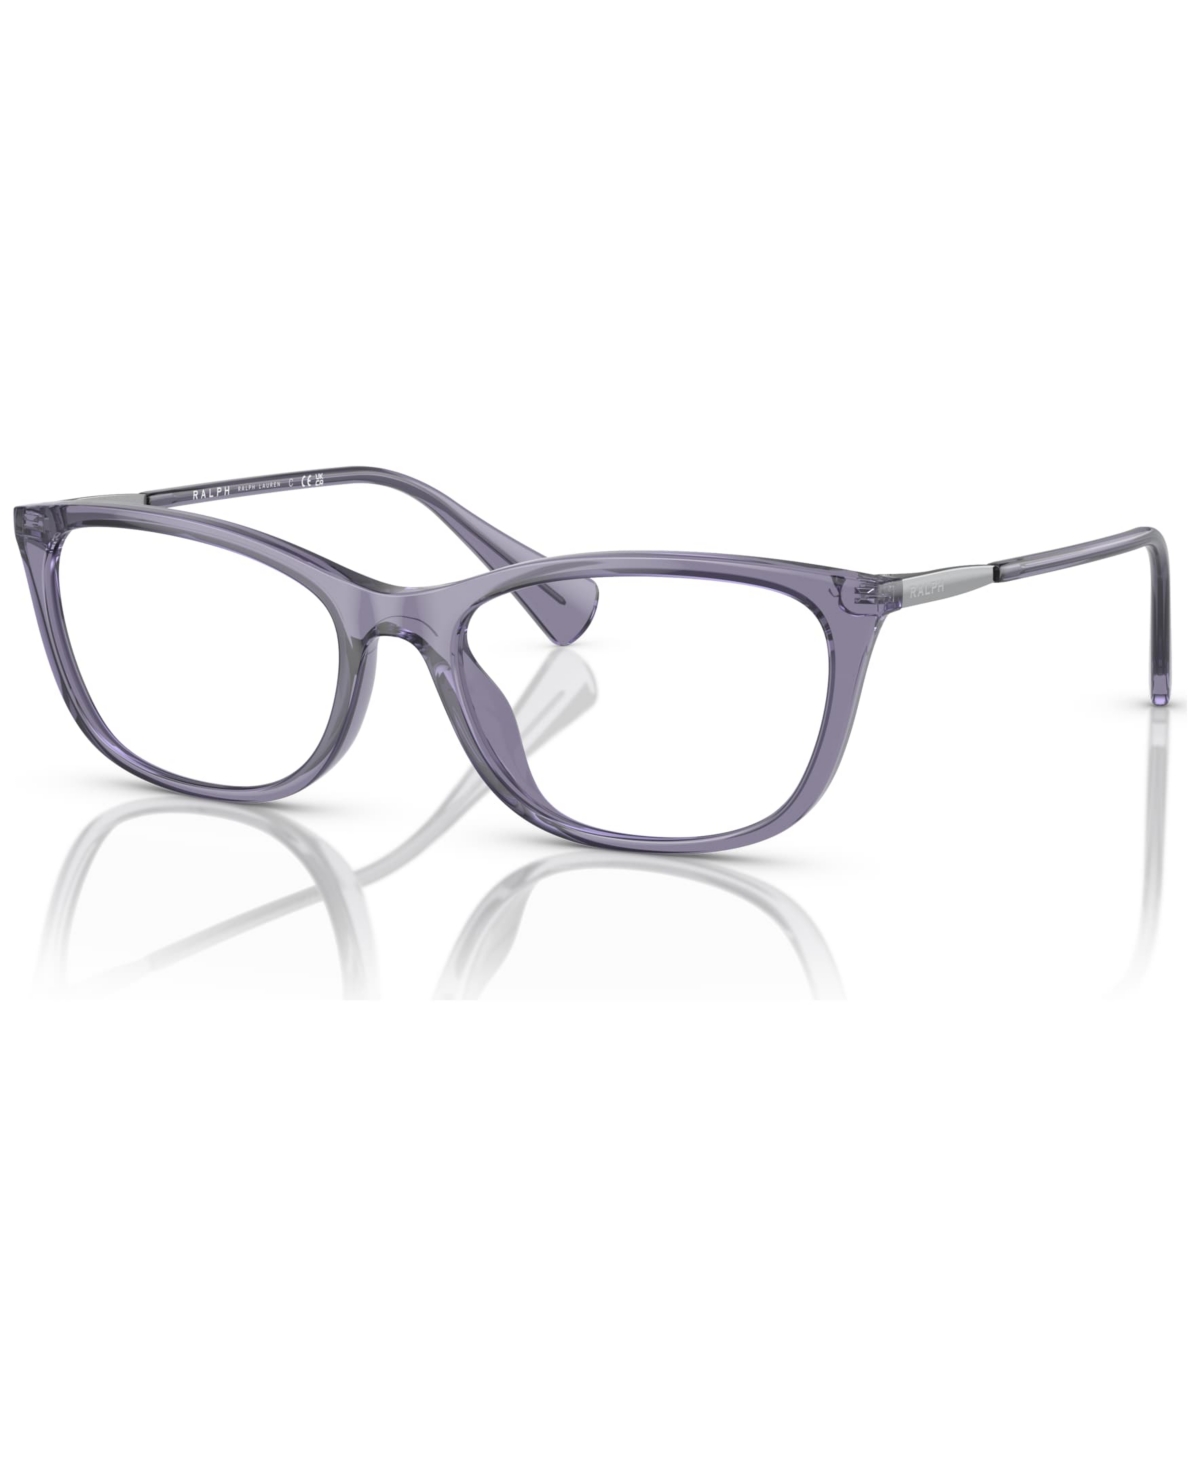 Women's Eyeglasses, RA7138U - Transparent Purple